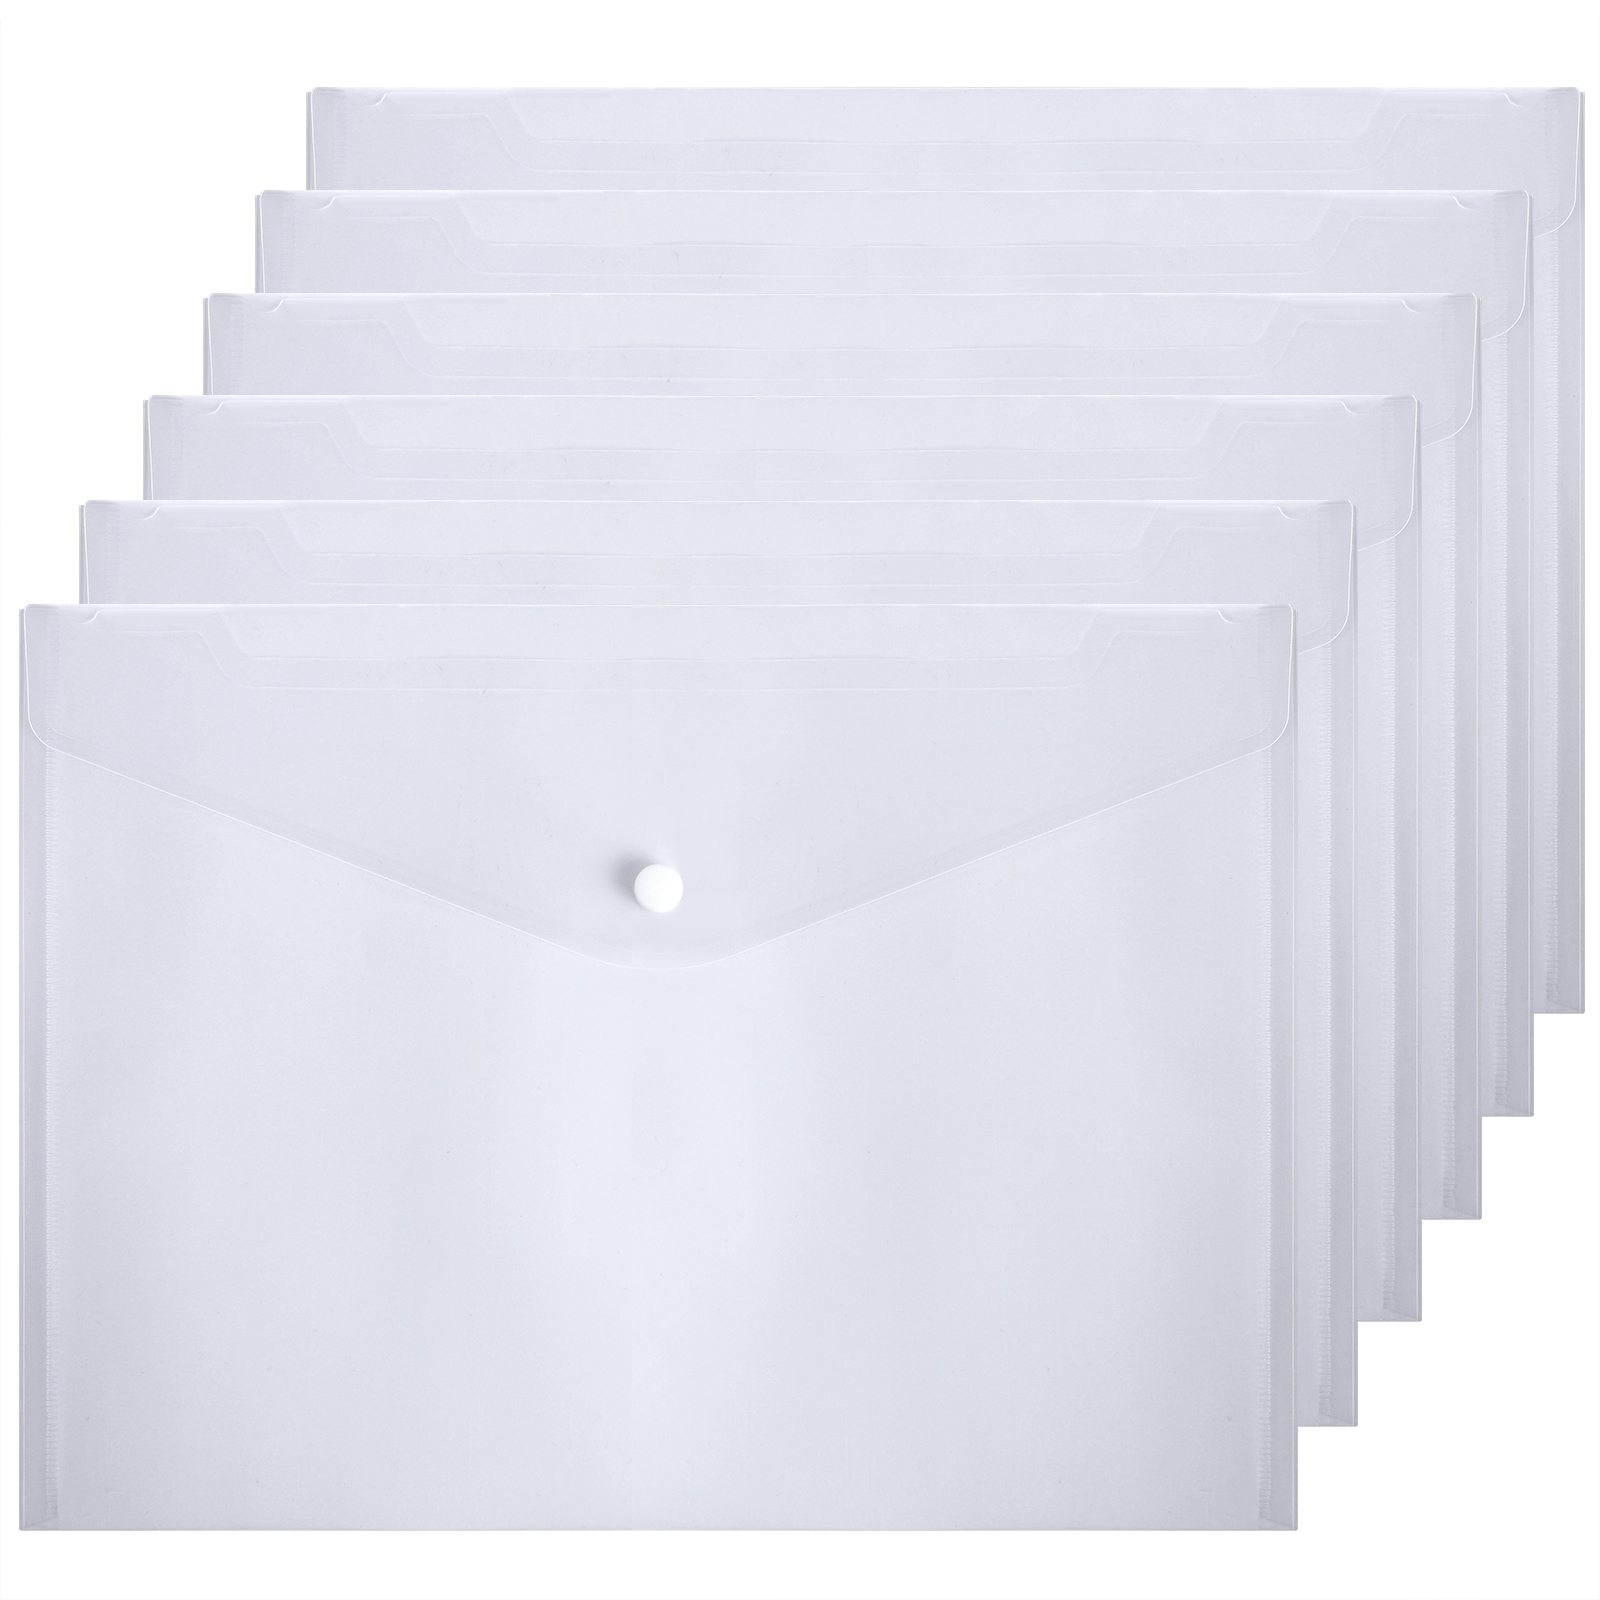 Enveloppes, enveloppes à soufflet et enveloppes expansibles